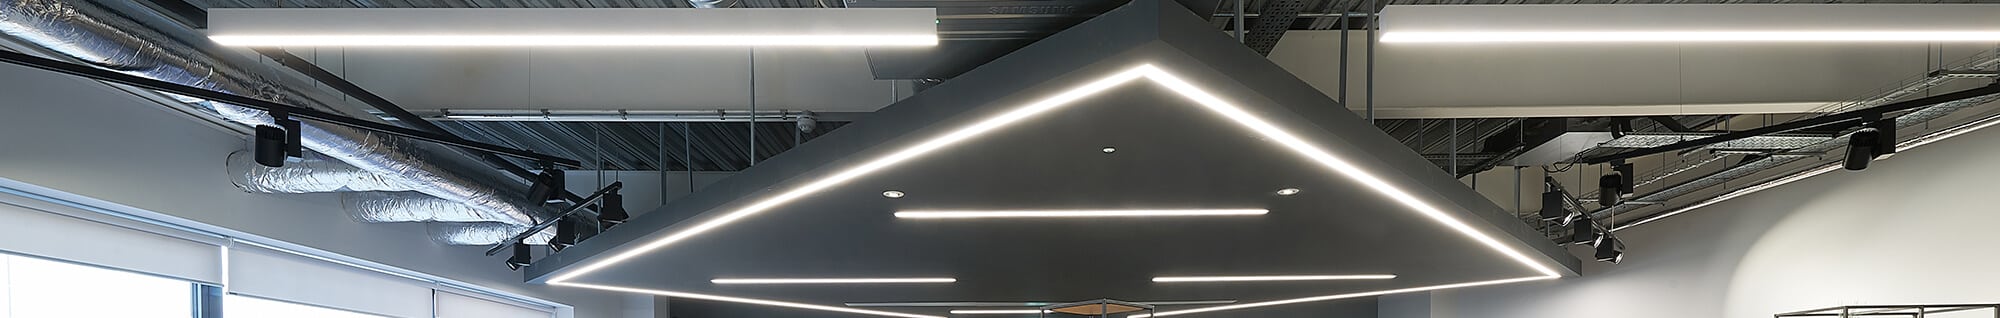 commercial led ceiling lights